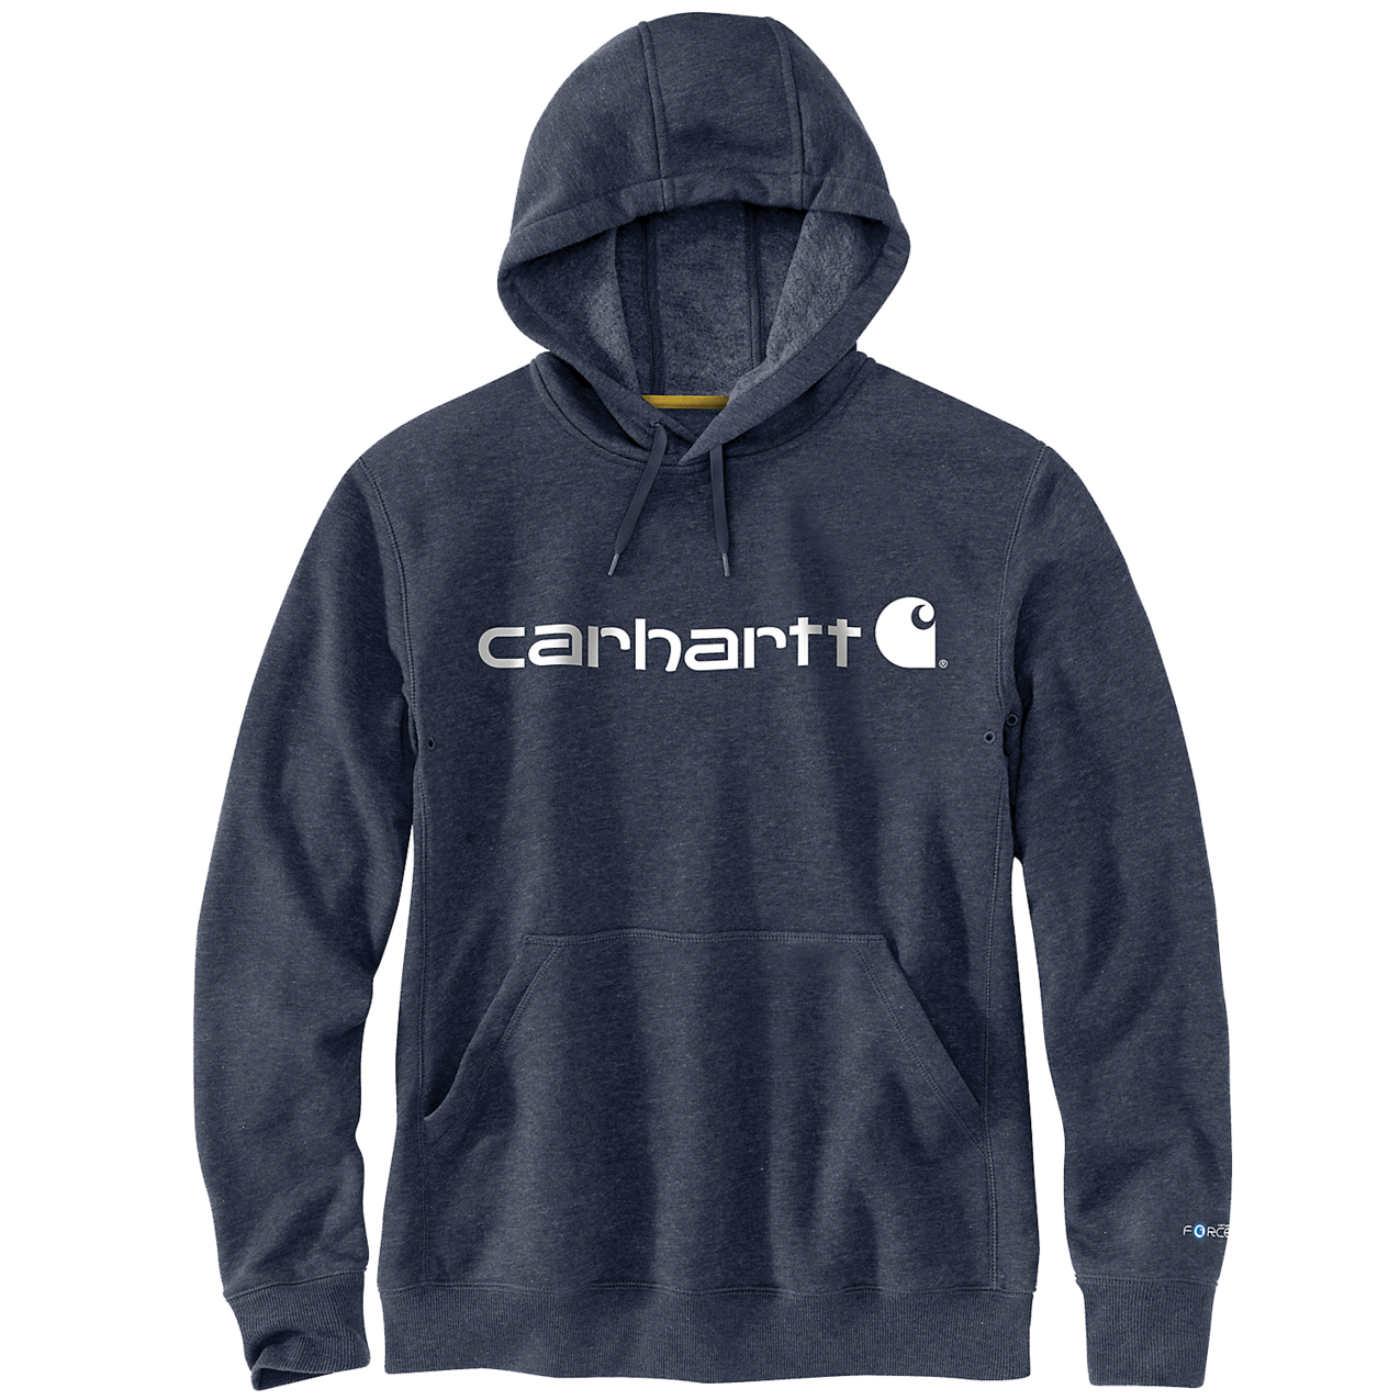 Delmont Graphic Hooded Carhartt Hooded Sweatshirt